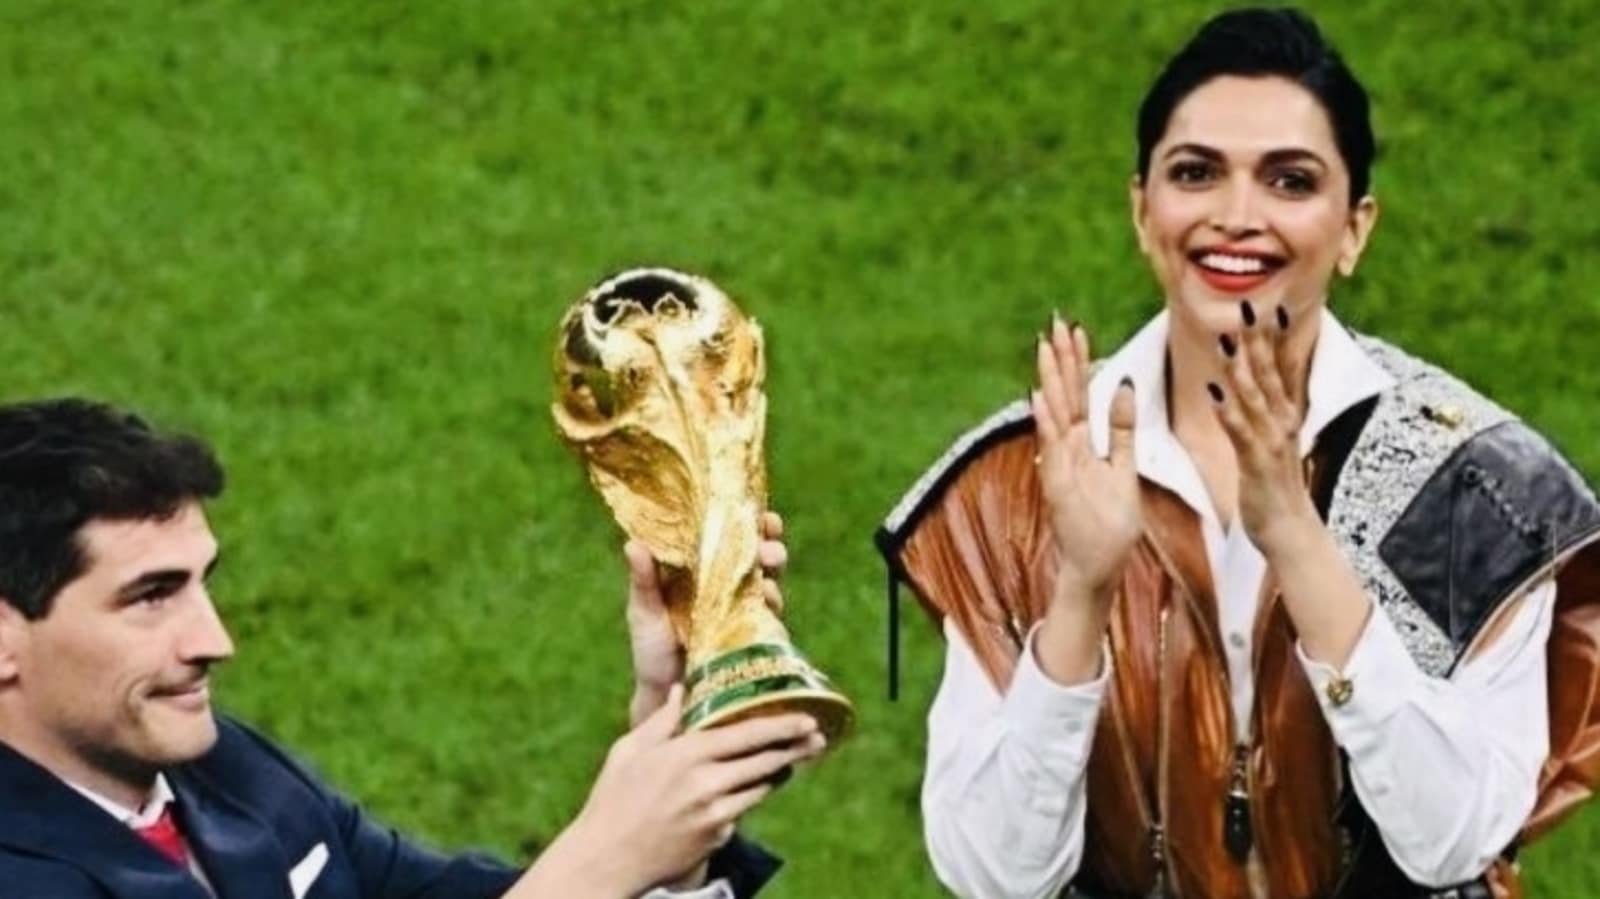 FIFA World Cup 2022: Deepika Padukone, Iker Casillas Unveil Trophy